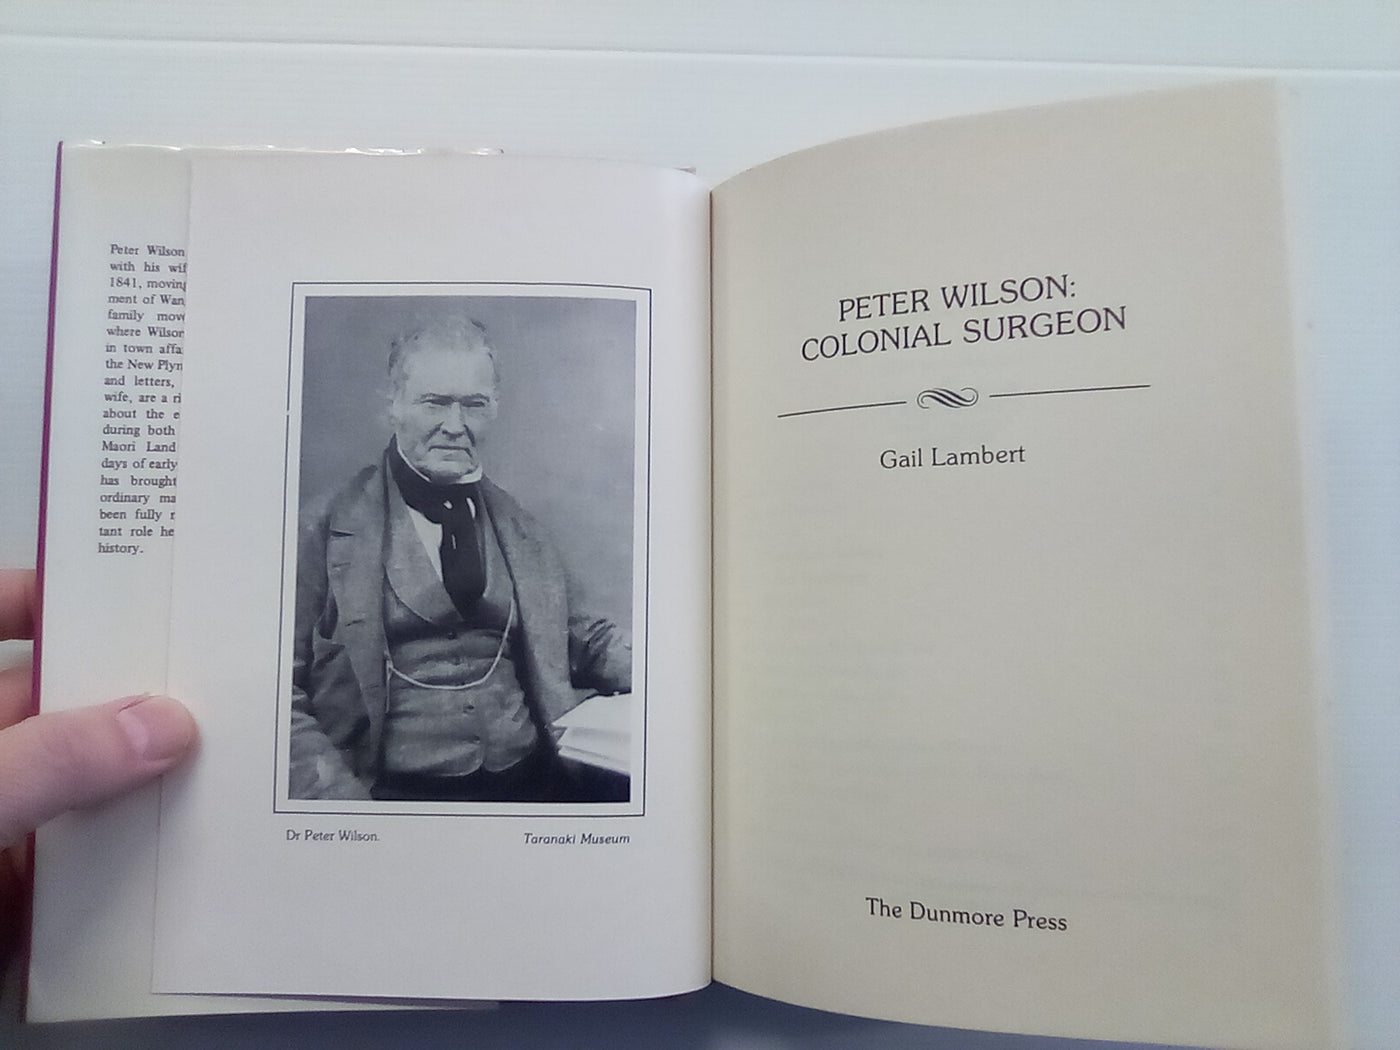 Peter Wilson: Colonial Surgeon (1981) by Gail Lambert